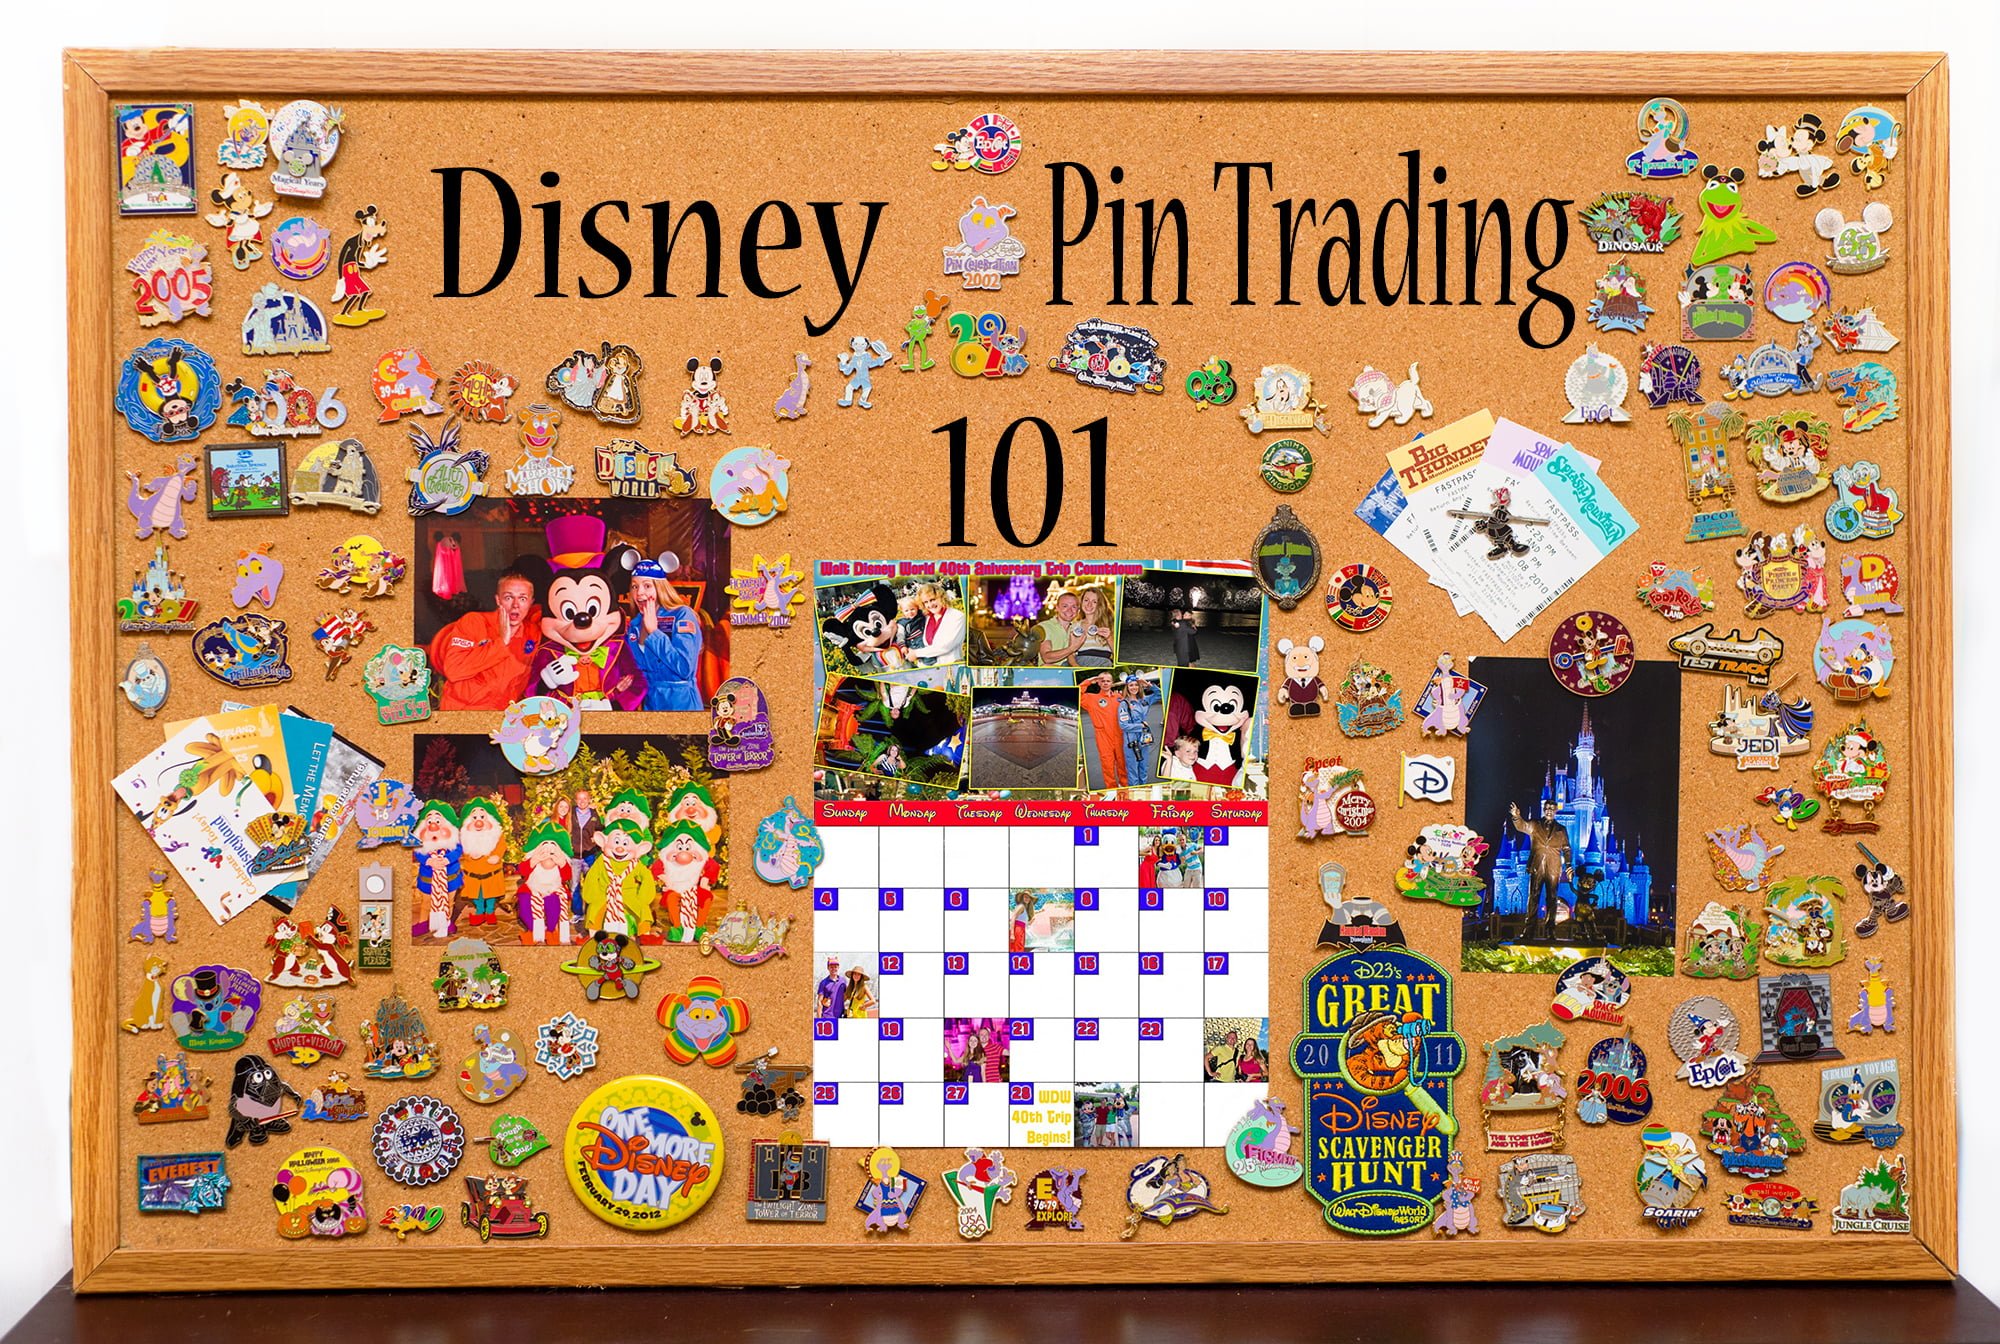 New Disney Pin Trading Bags and Lanyards Available at Disneyland